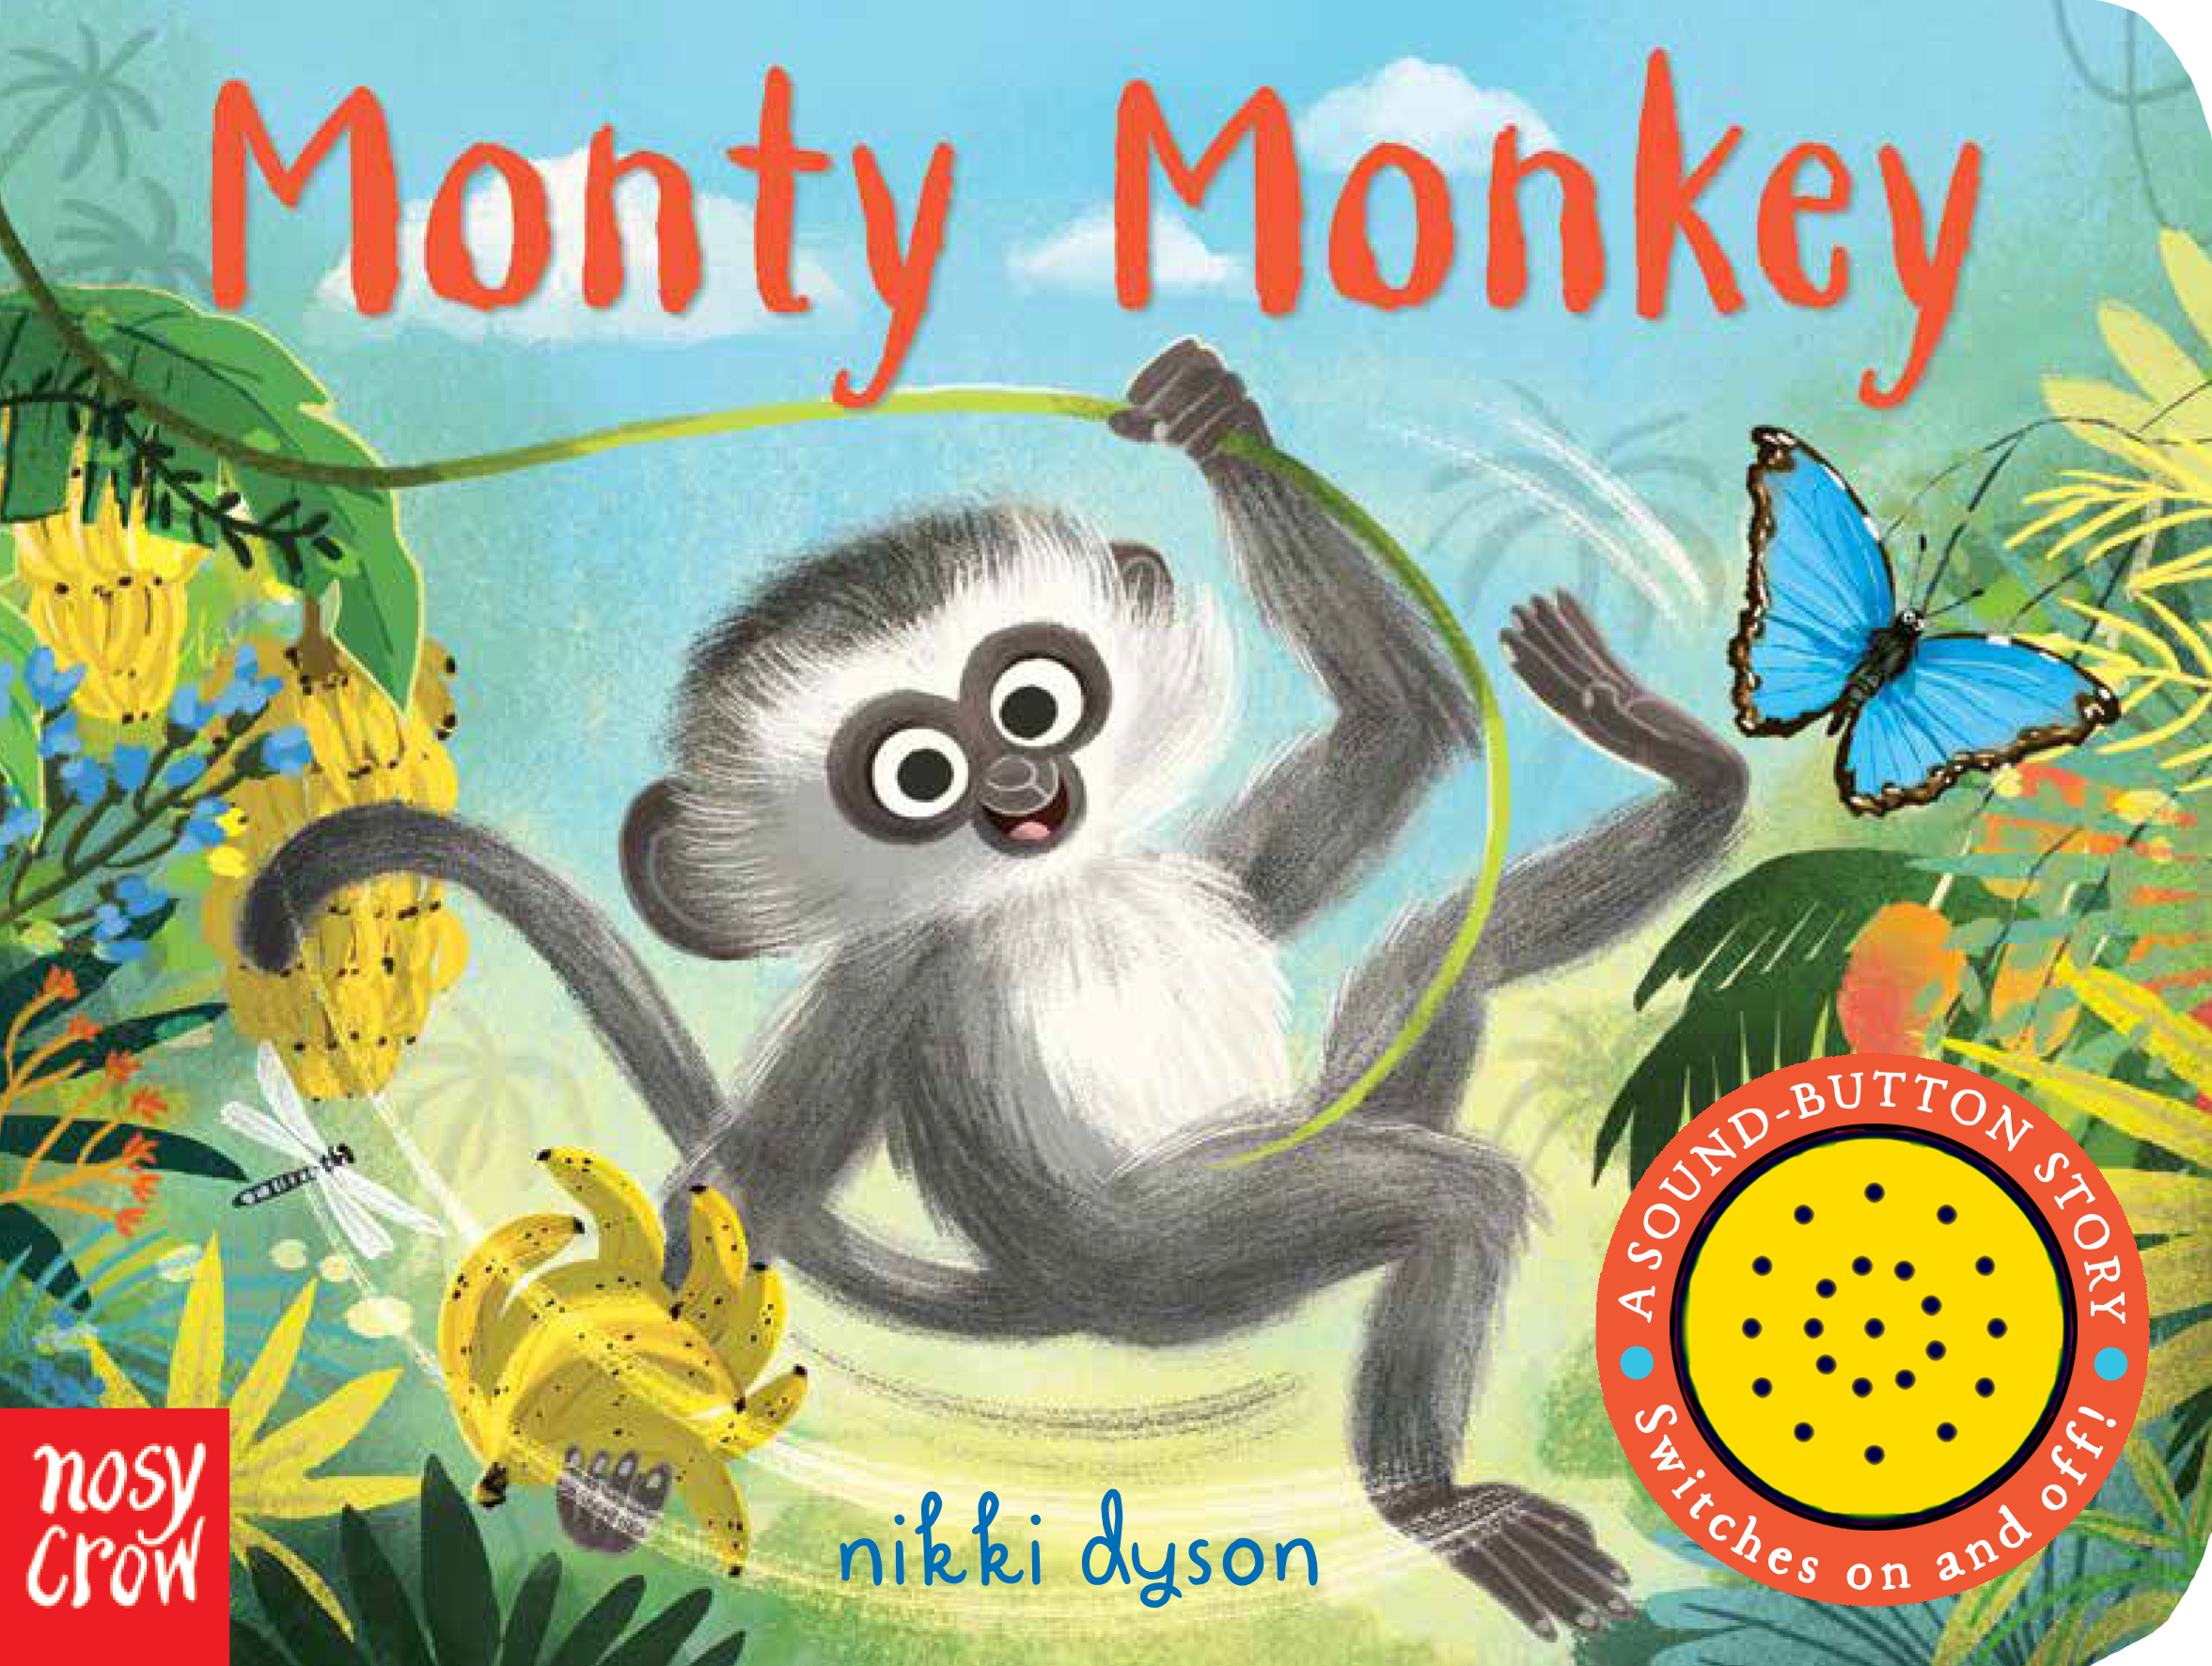 Sound-button Stories: Monty Monkey